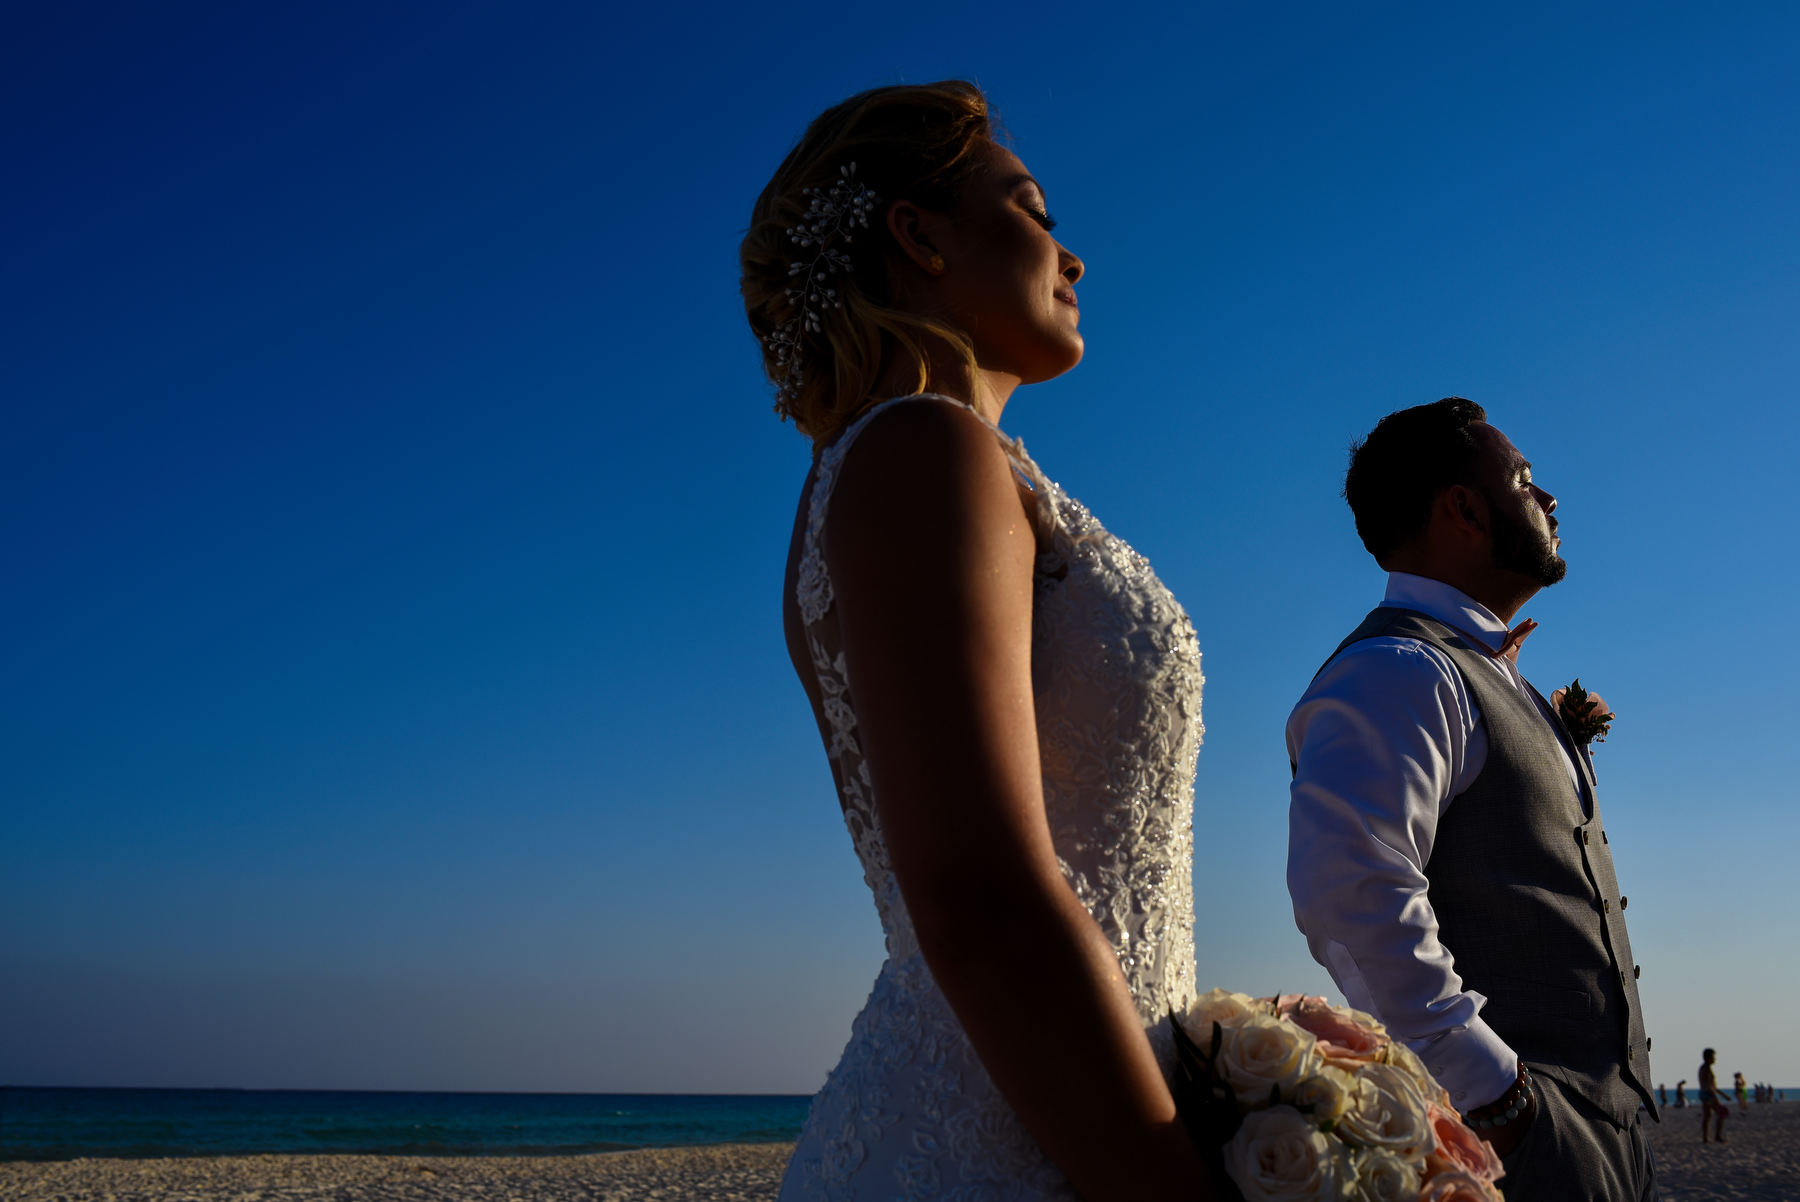 Bride and groom beach sunset creative portrait Playa del Carmen Mexico wedding